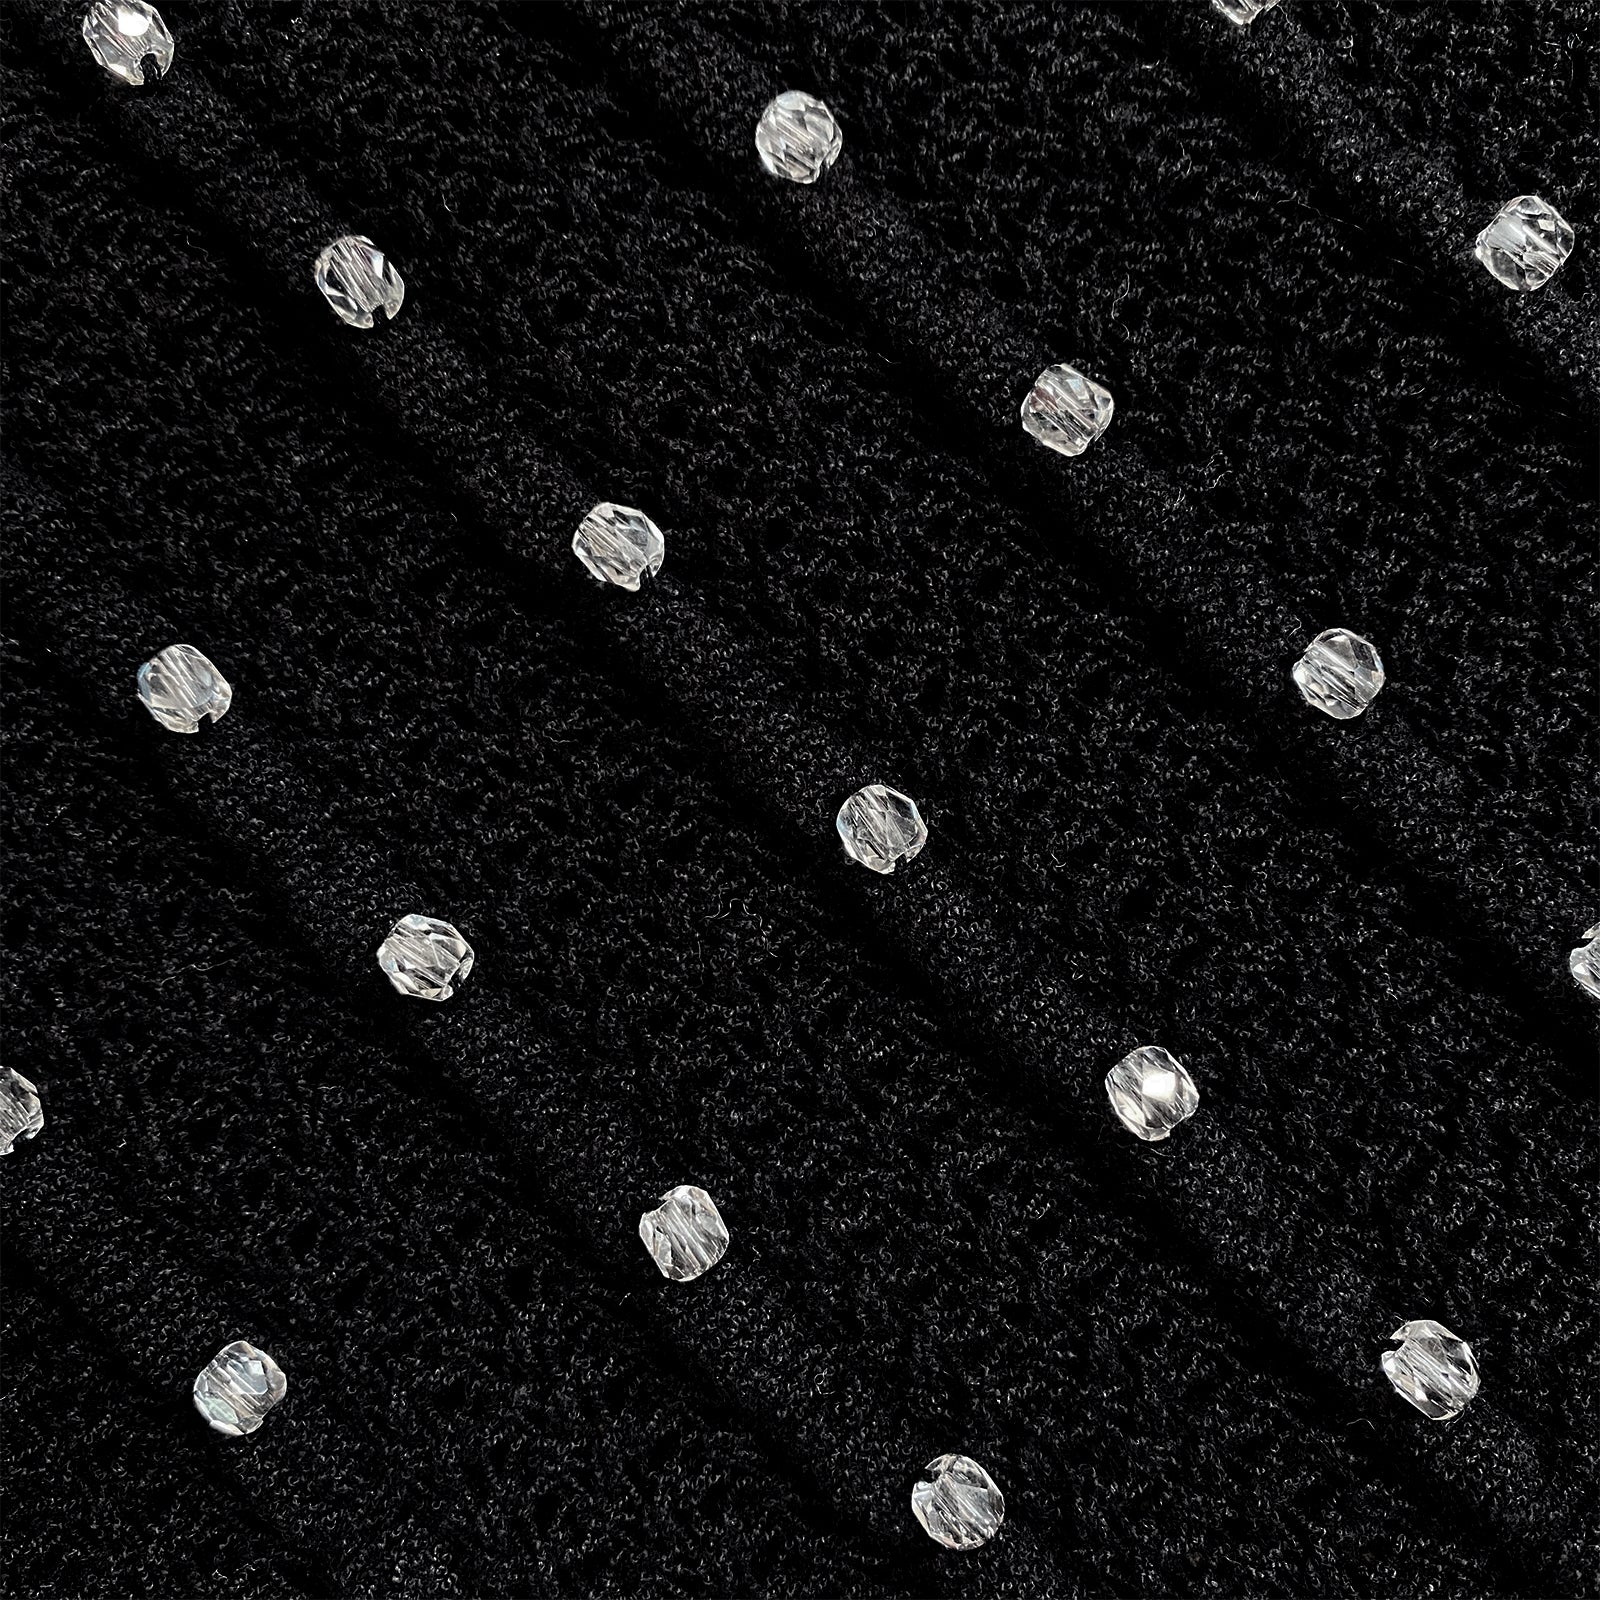 Black Beaded Strappy Knit Midi Dress